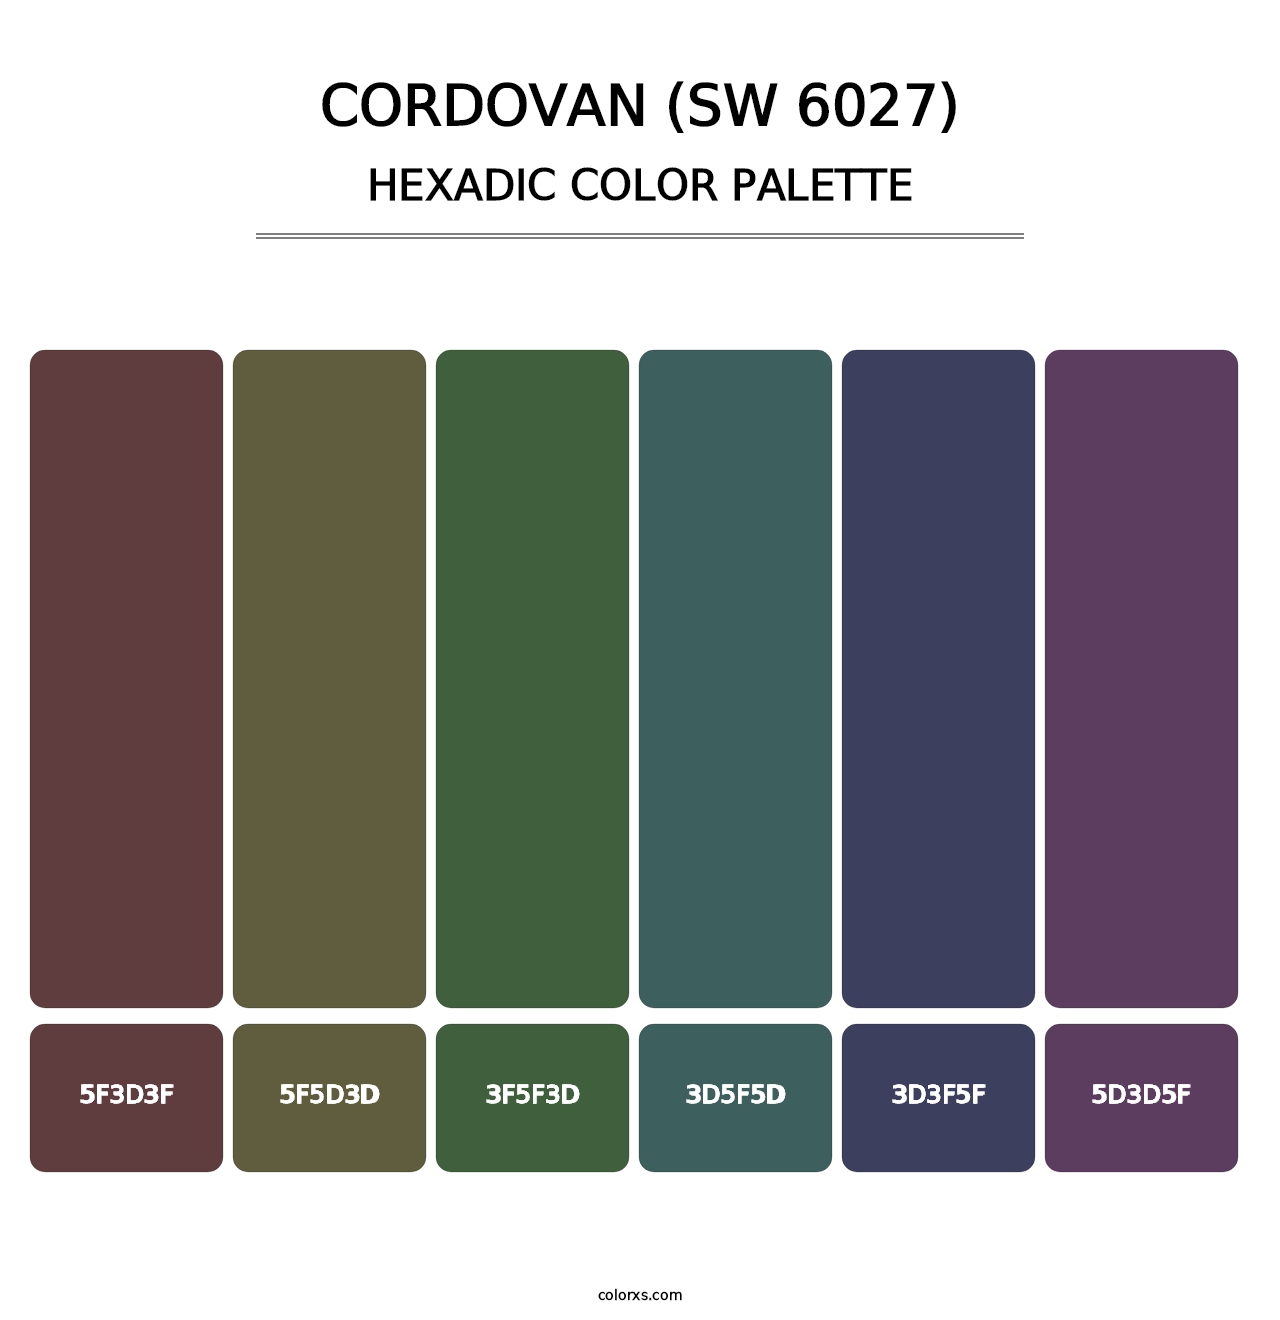 Cordovan (SW 6027) - Hexadic Color Palette